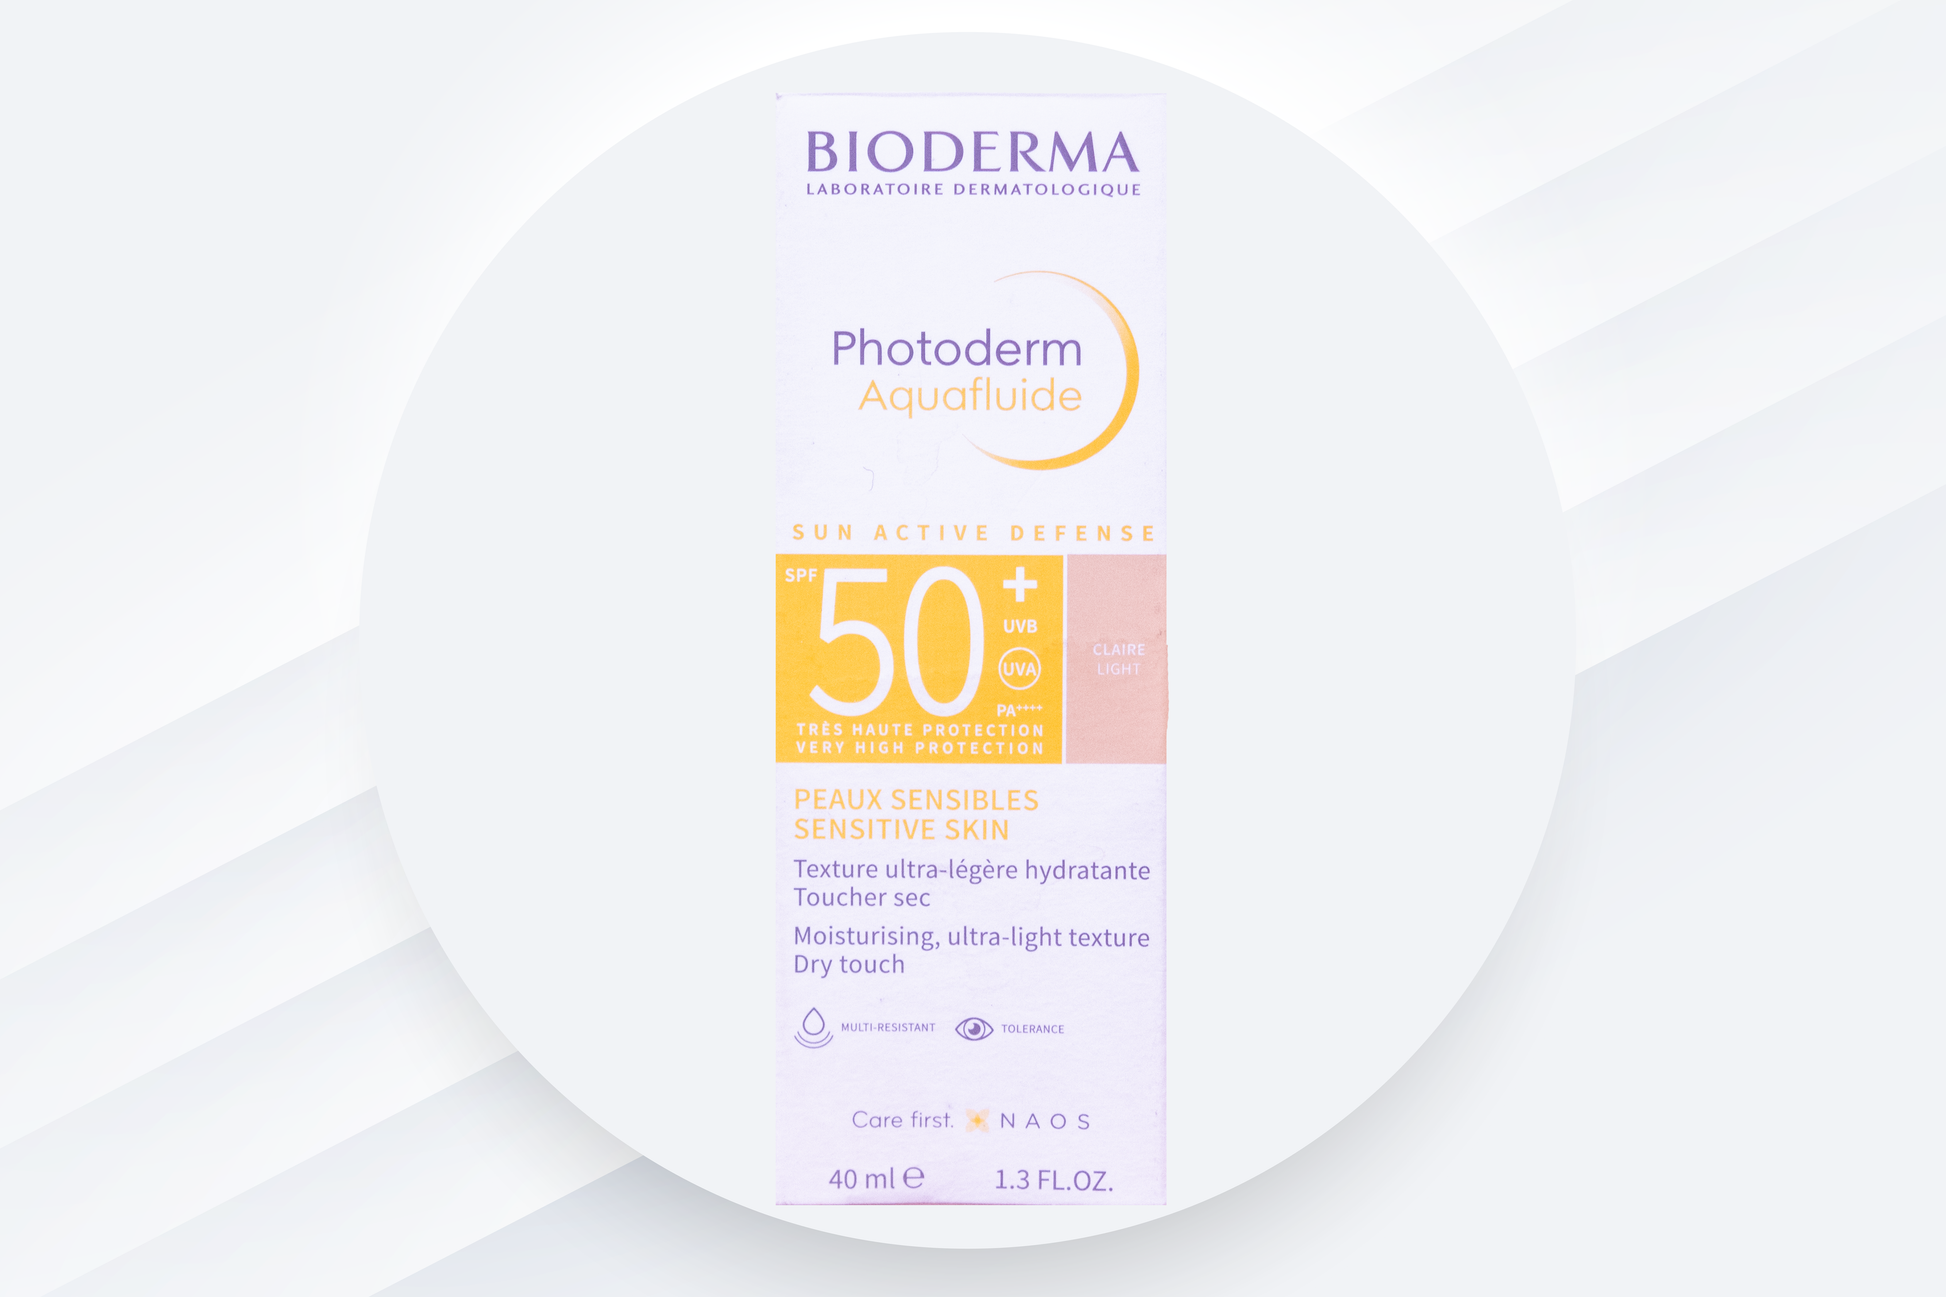 Bioderma-Photoderm-Aquafluide-spf-50+claire-light-Sensitive-Skin-clintry